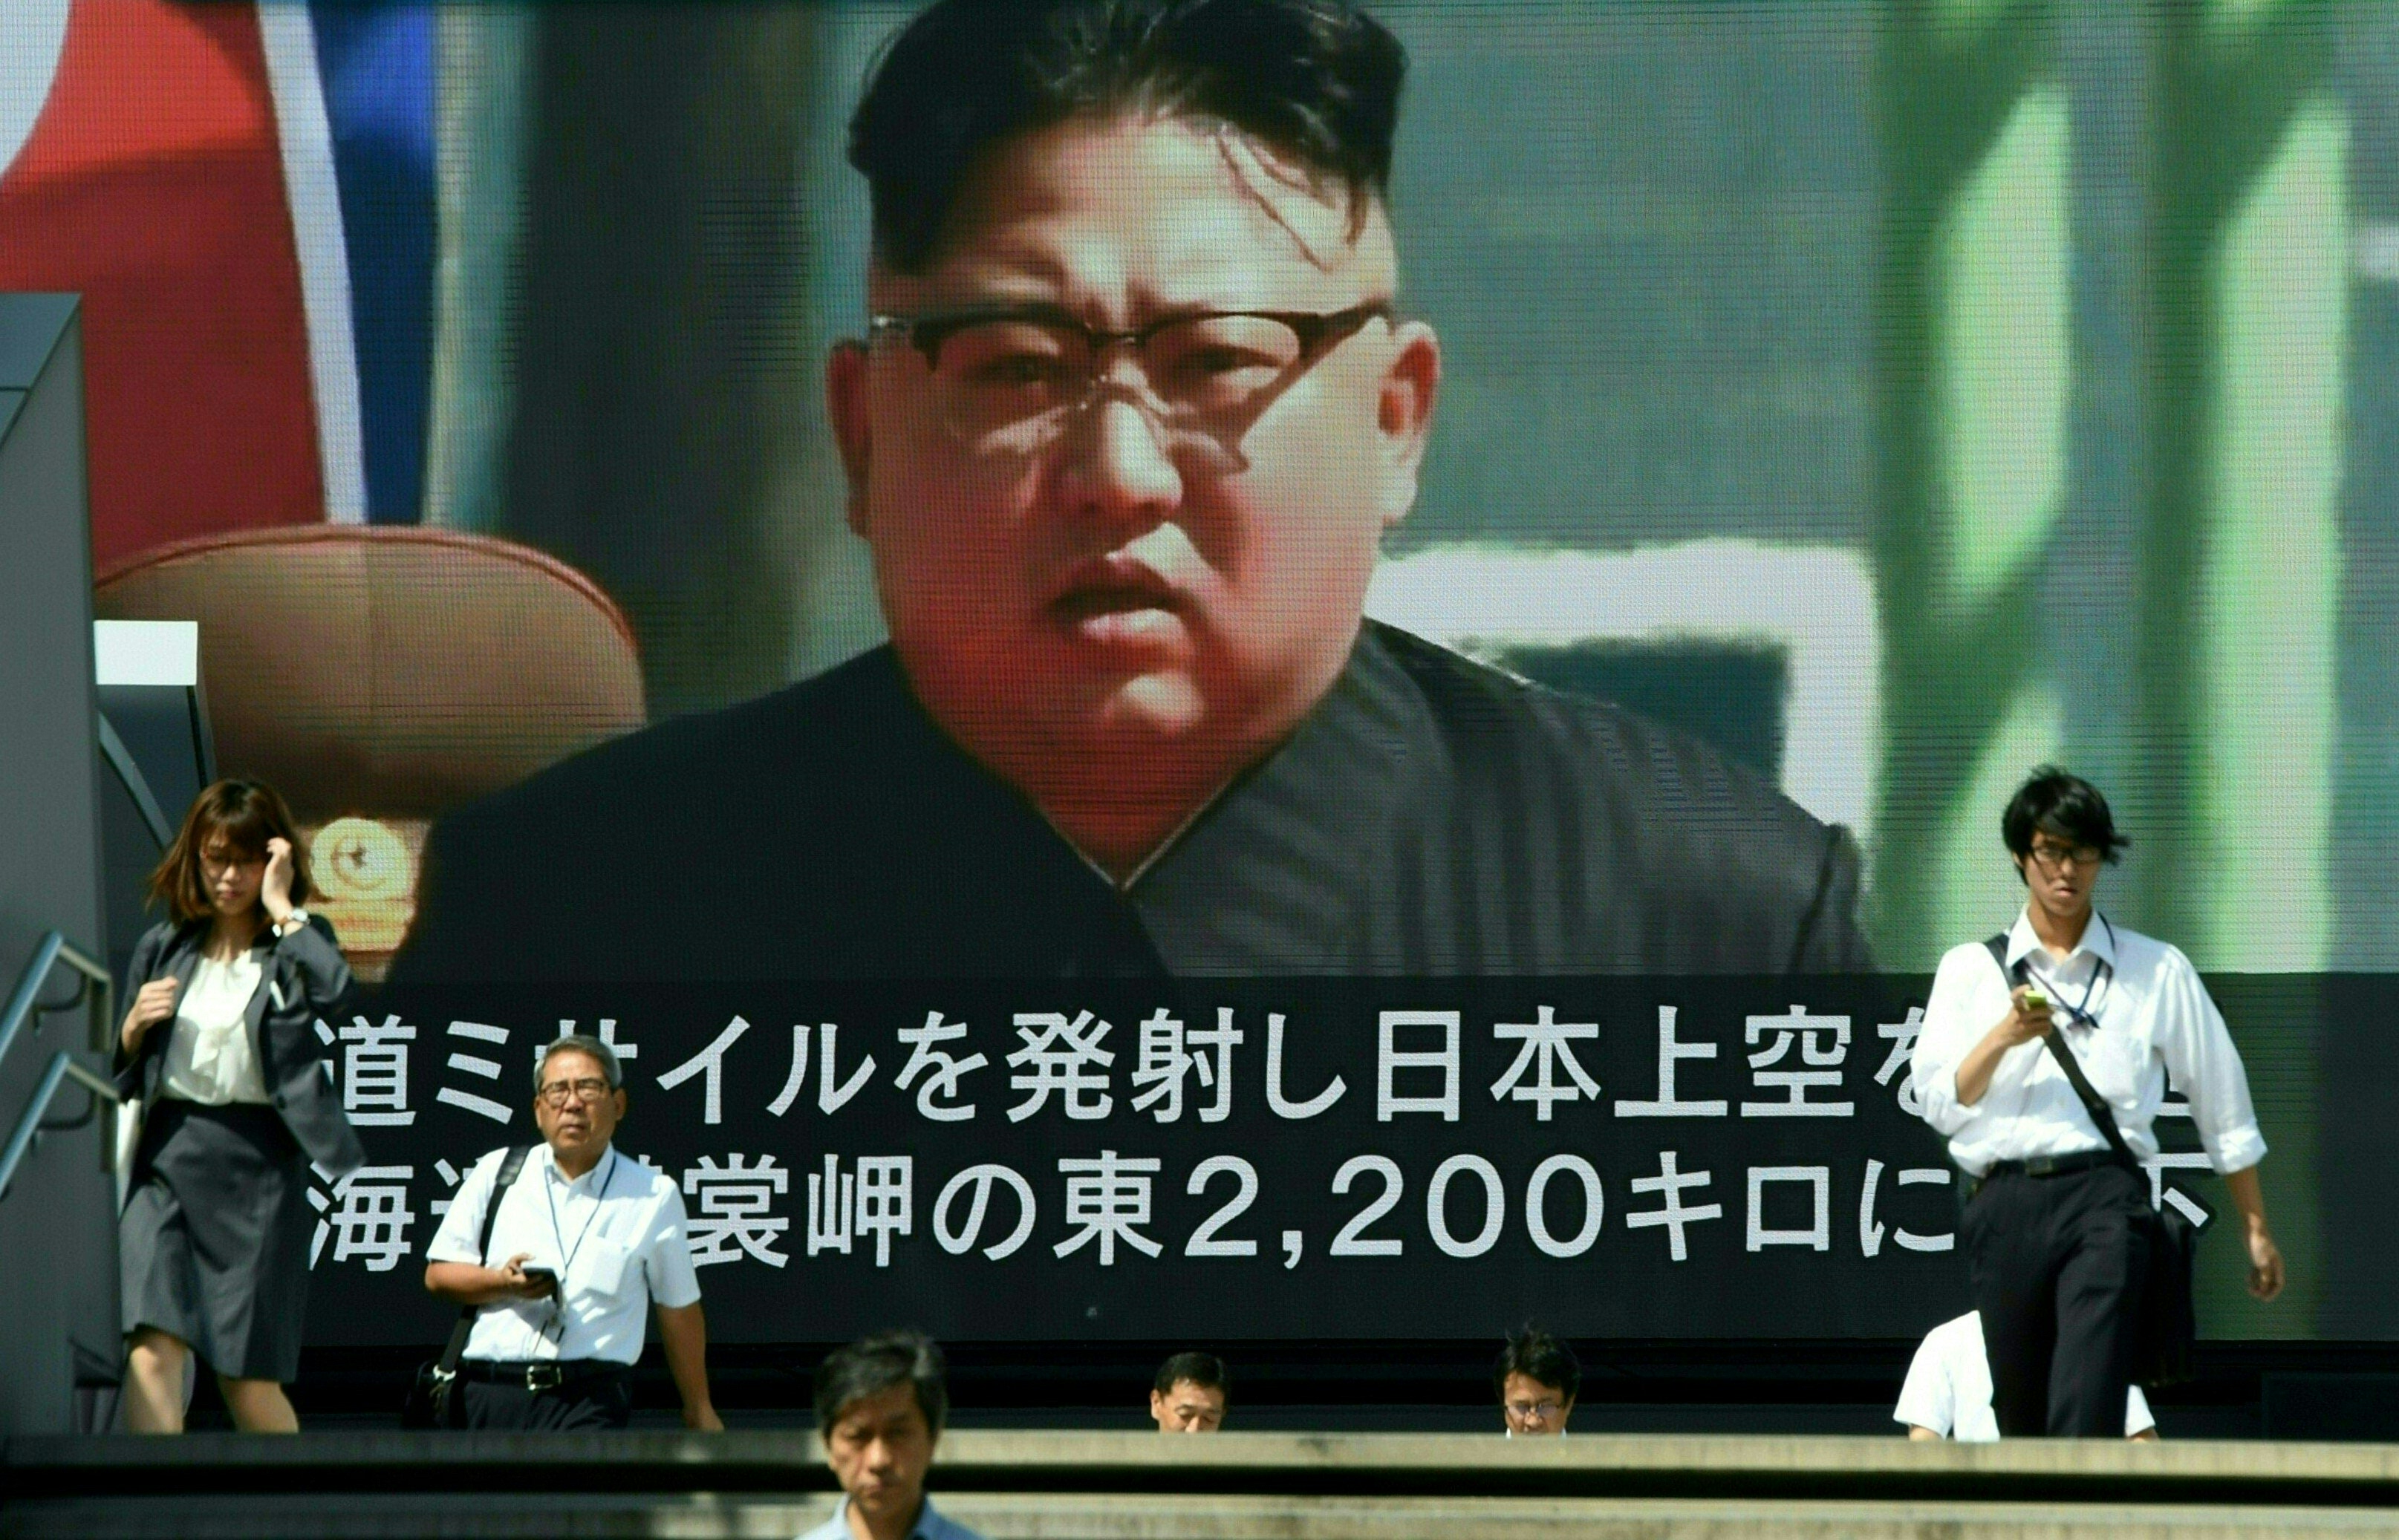 A video screen shows Kim Jong Un in Tokyo